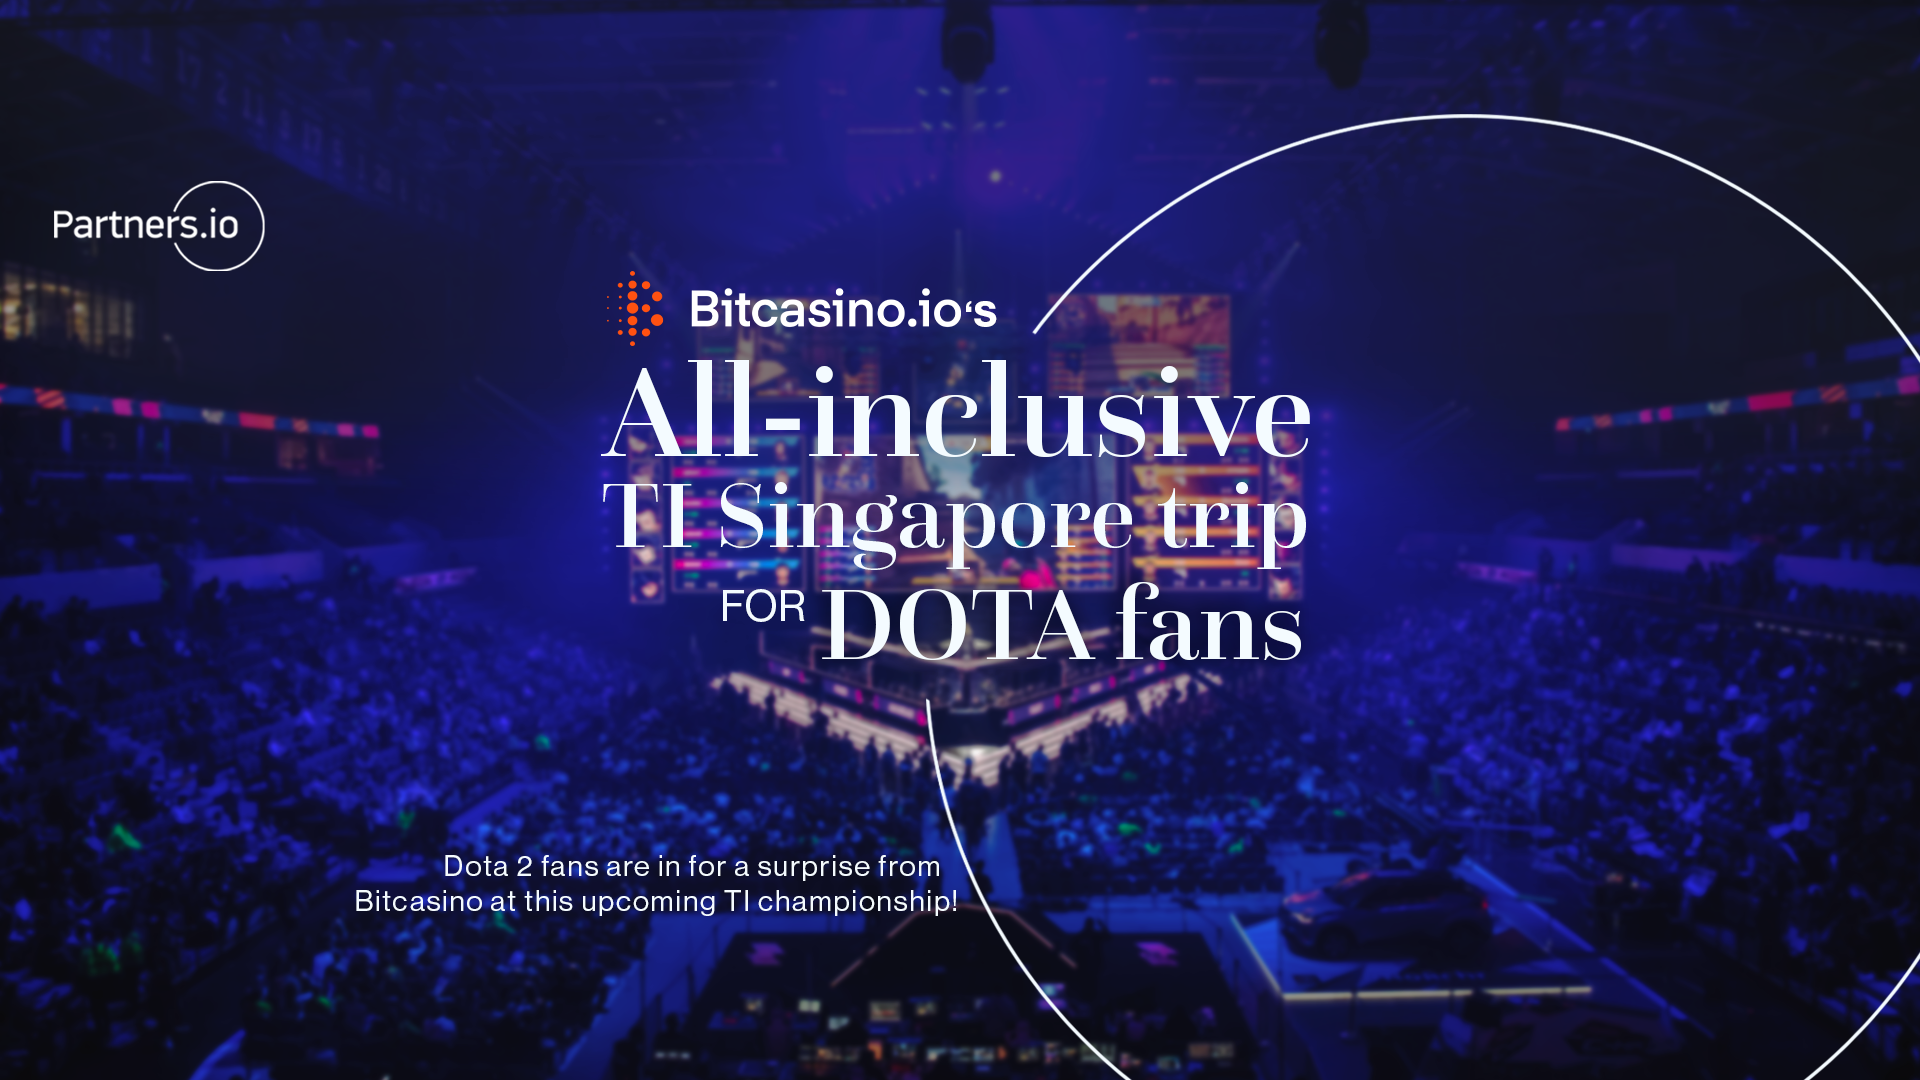 Bitcasino’s All-inclusive TI Singapore trip for Dota 2 fans